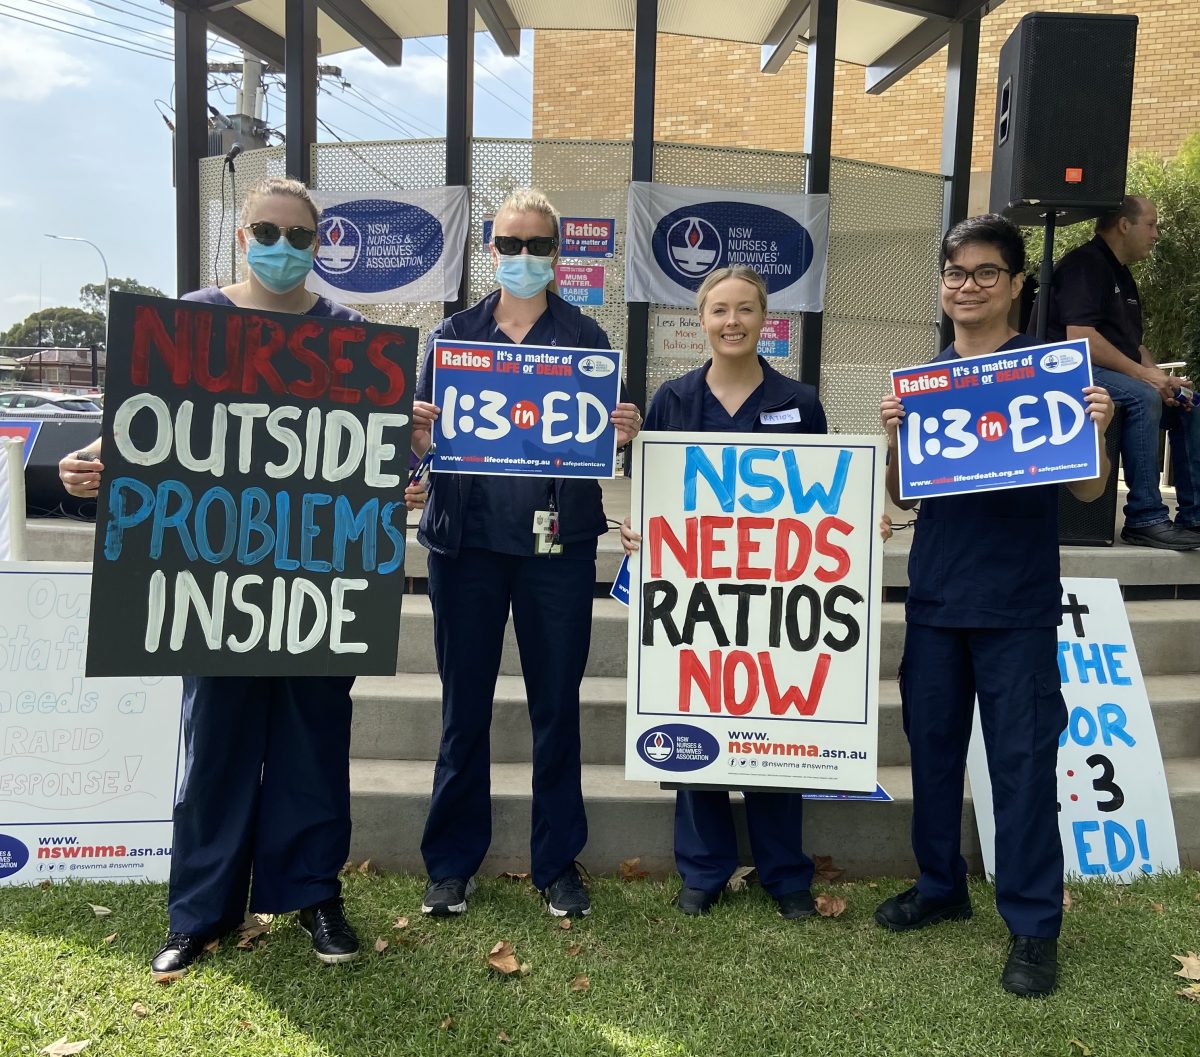 Four nurses hold placards